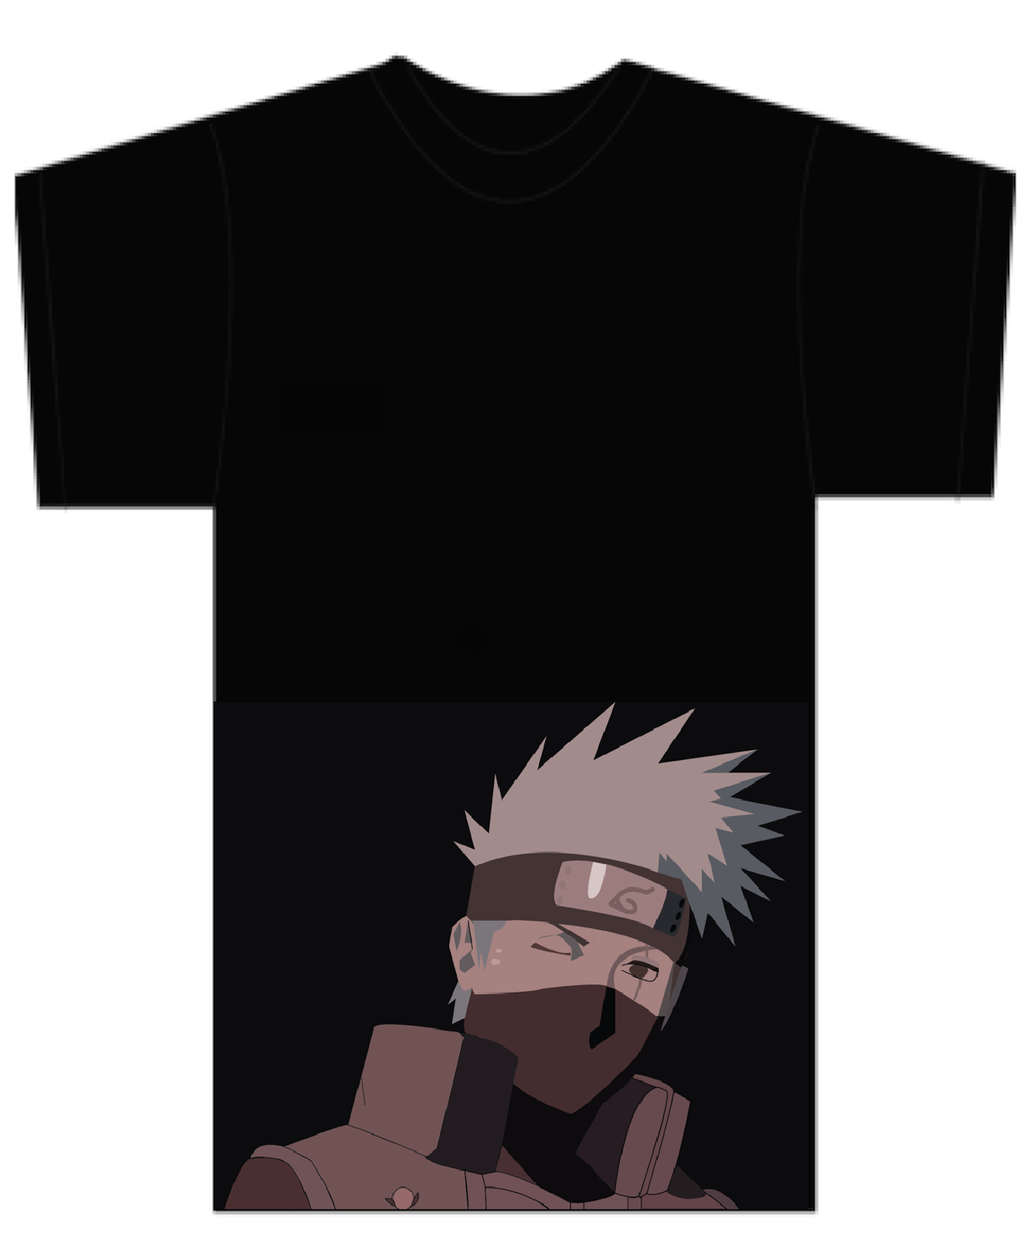 Kakashi Hatake Design On T shirt Template by CreativeDyslexic on DeviantArt